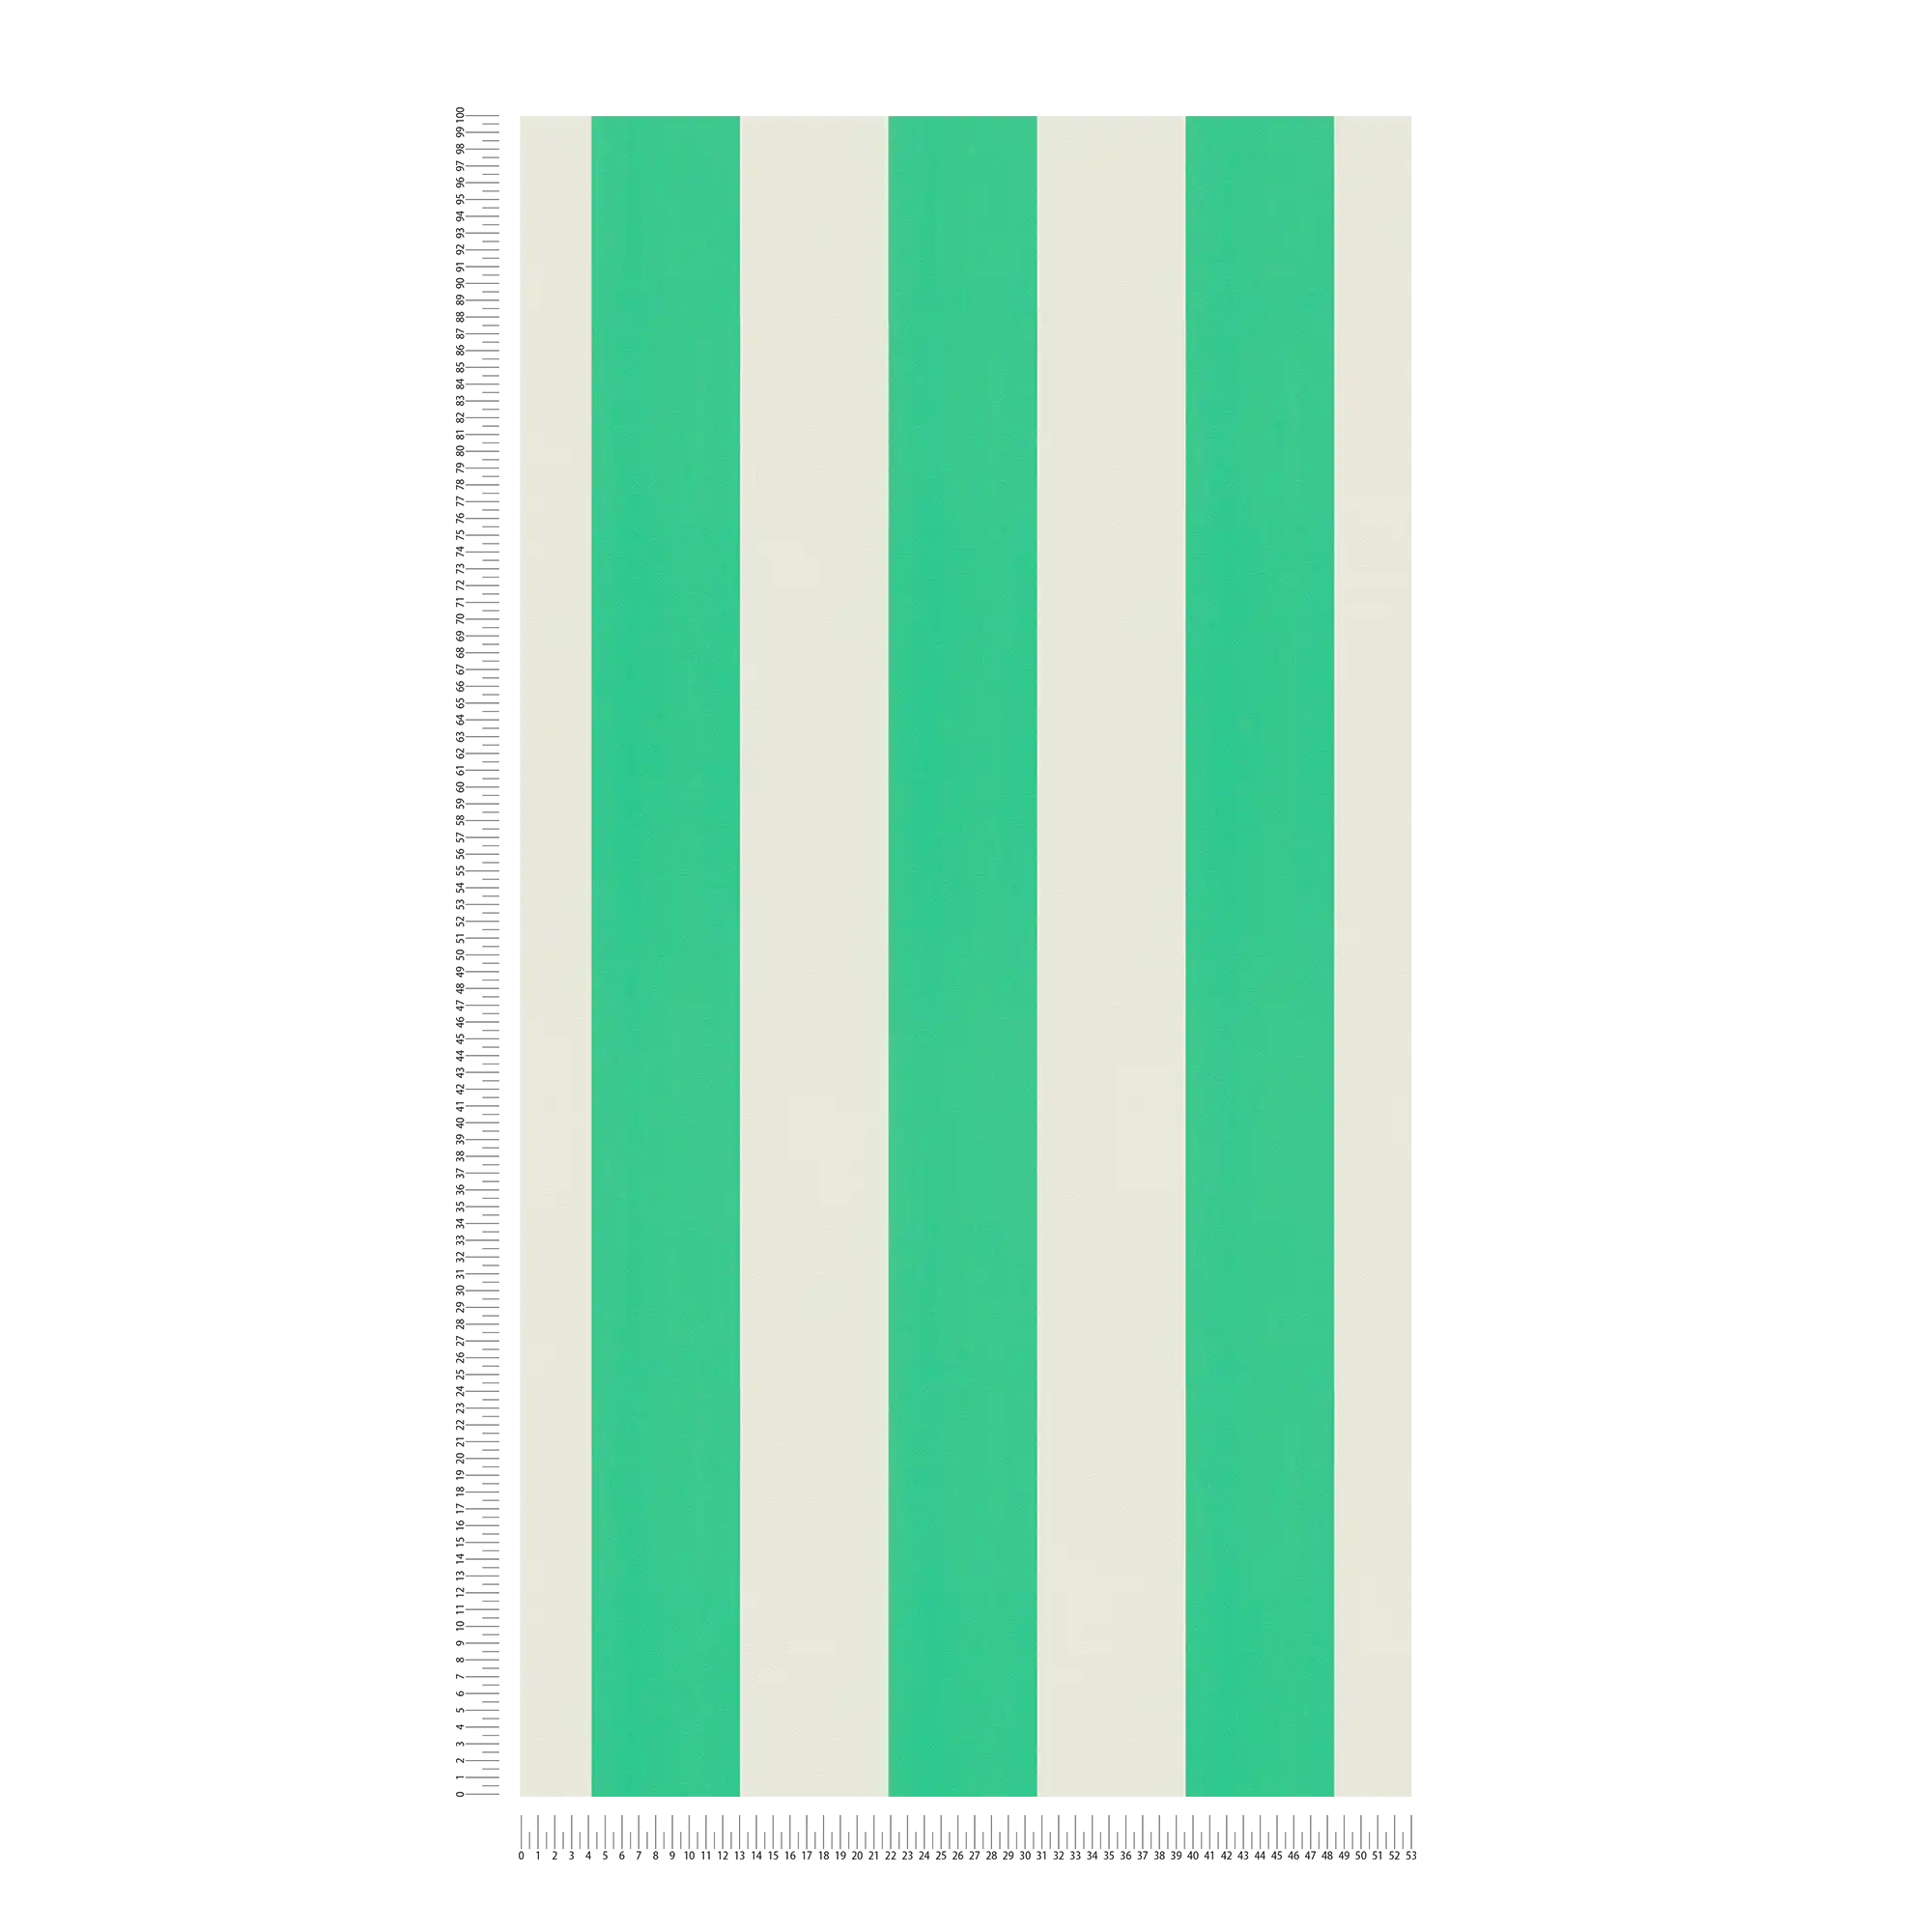             Papel pintado a rayas con estructura ligera - verde, blanco
        